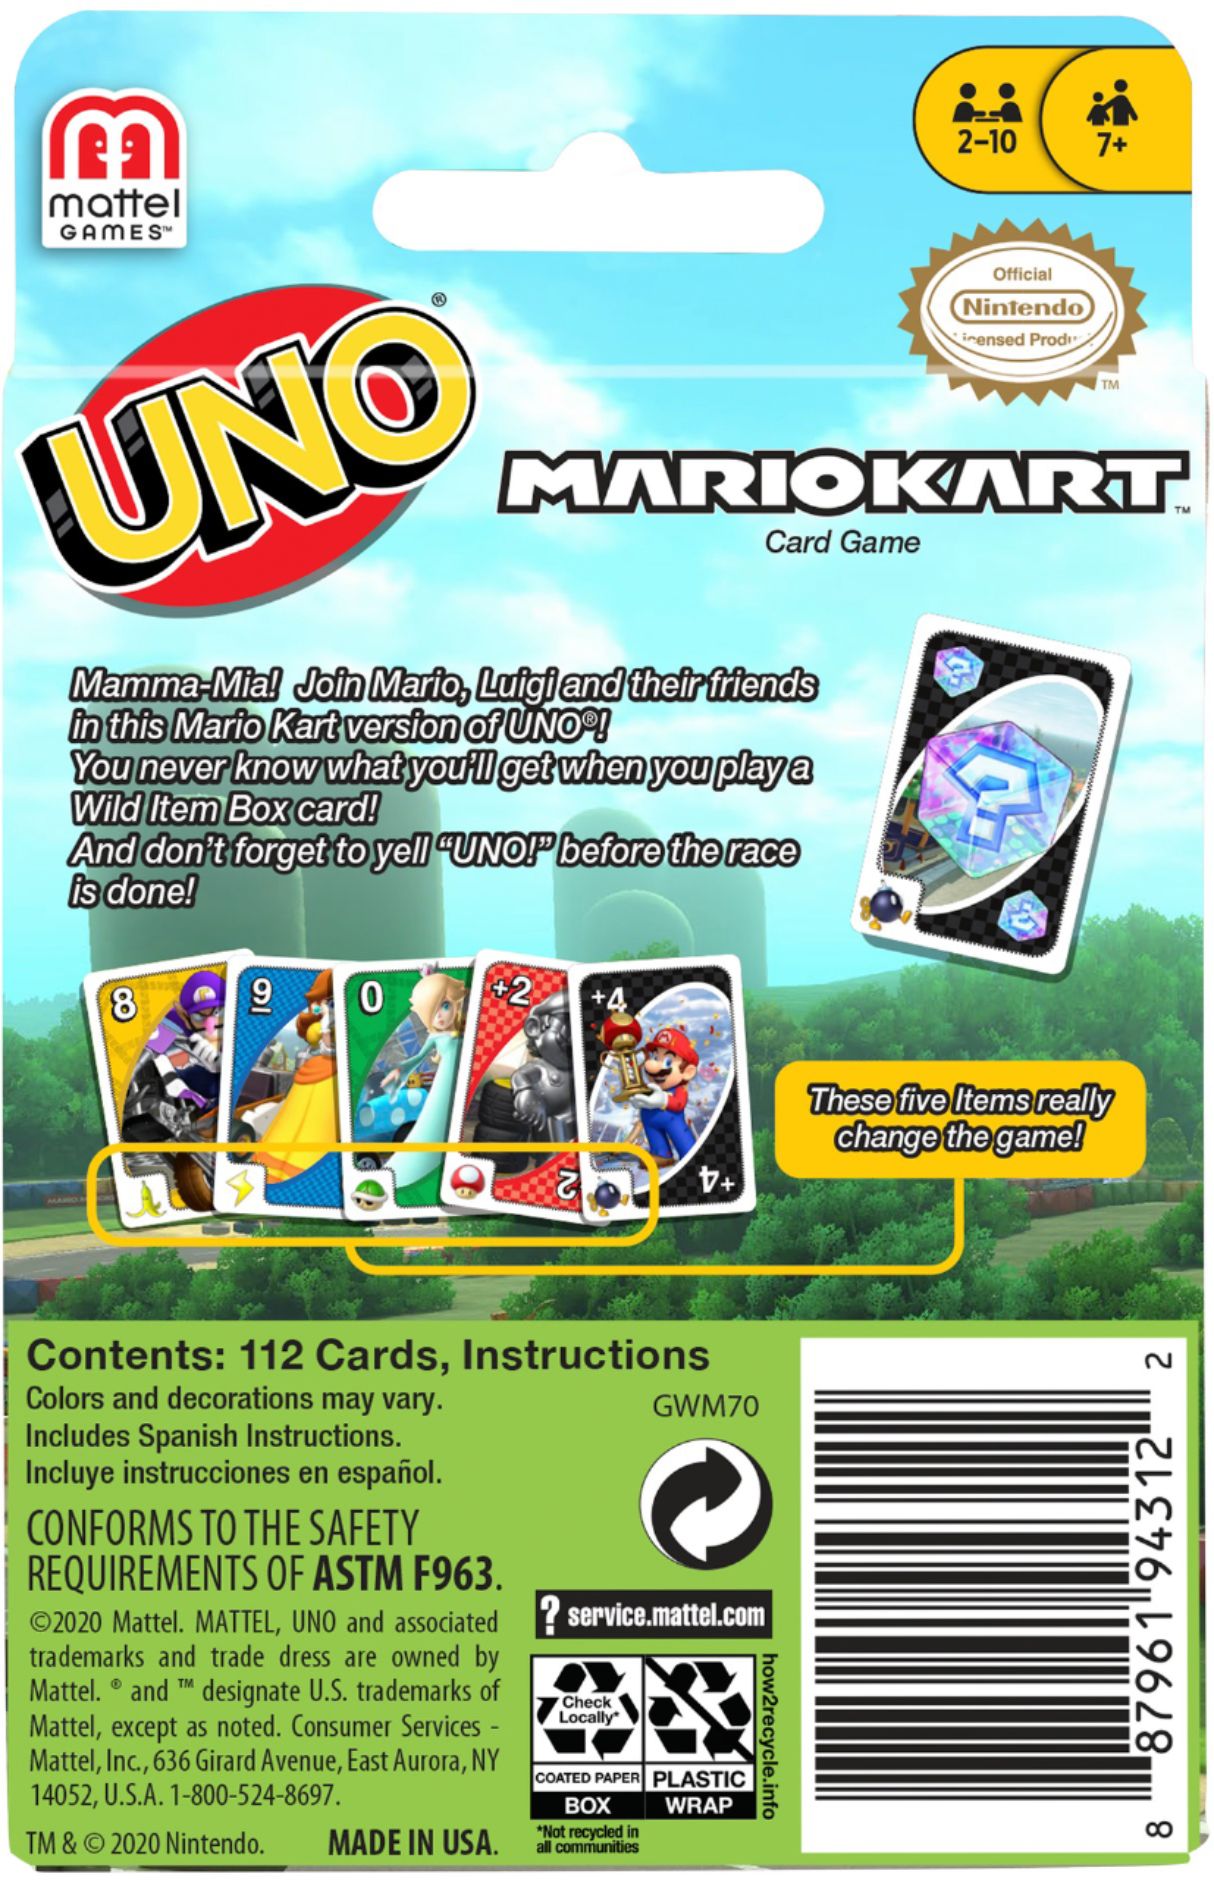 Best Buy: Mattel Magic 8 Ball Nintendo Super Mario Novelty Toy Yellow 90803